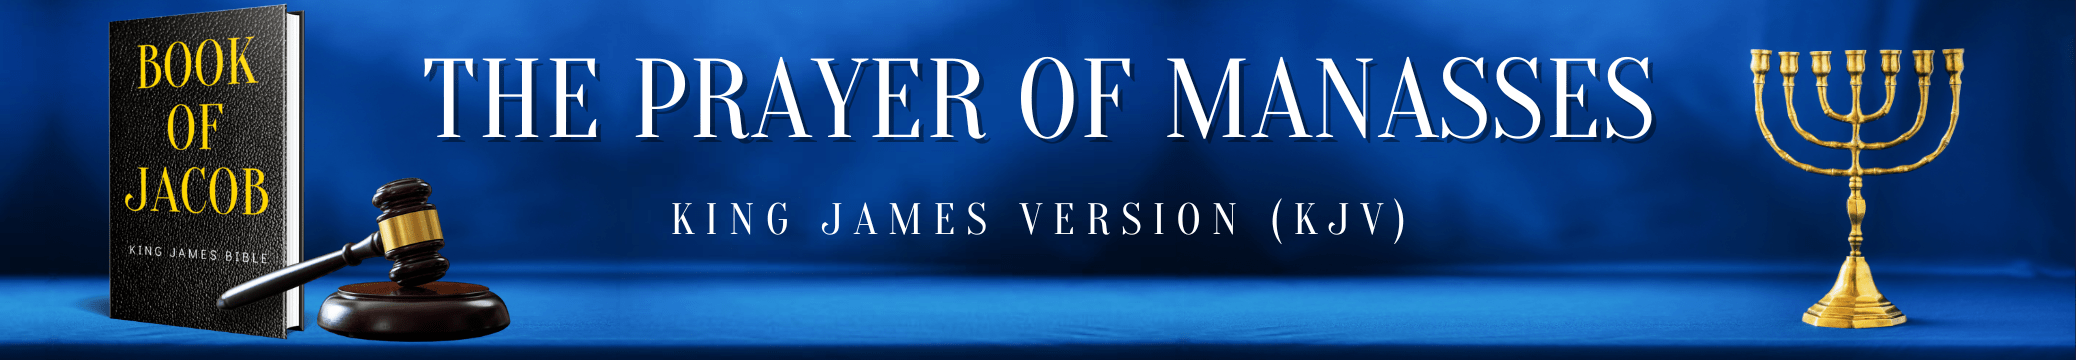 The Prayer of Manasses